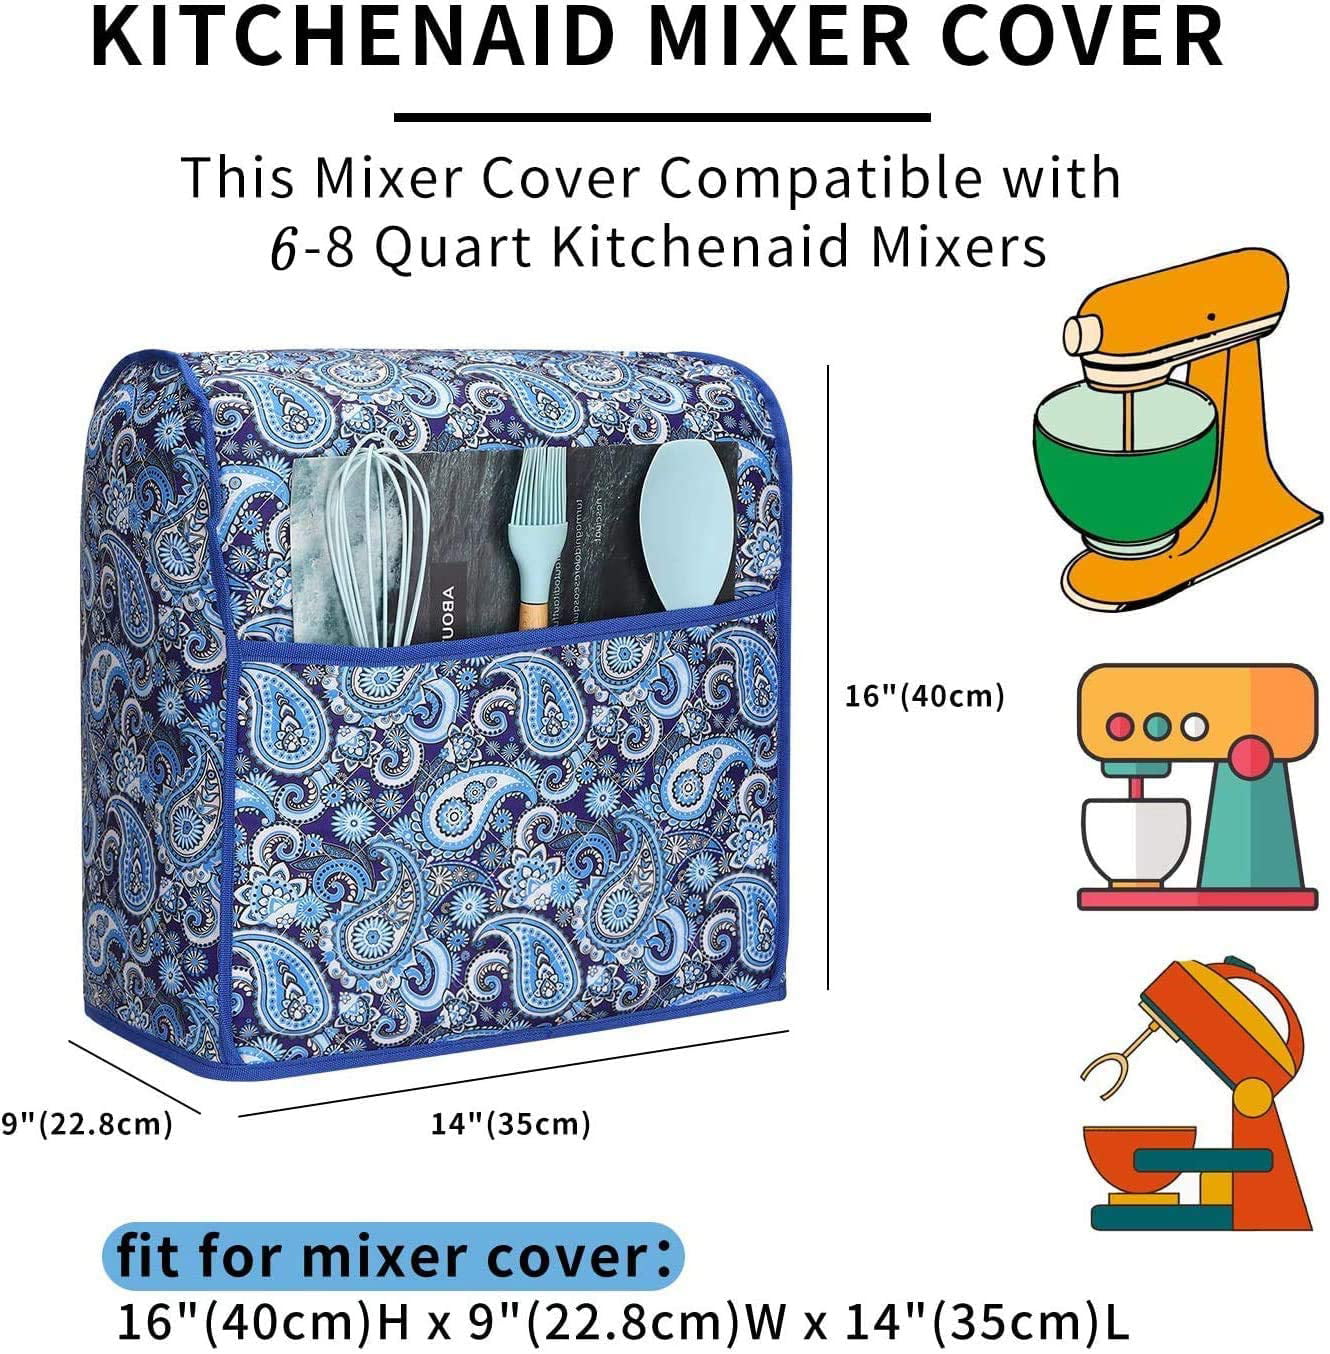 Reversible Kitchenaid Mixer Cover - Swoodson Says